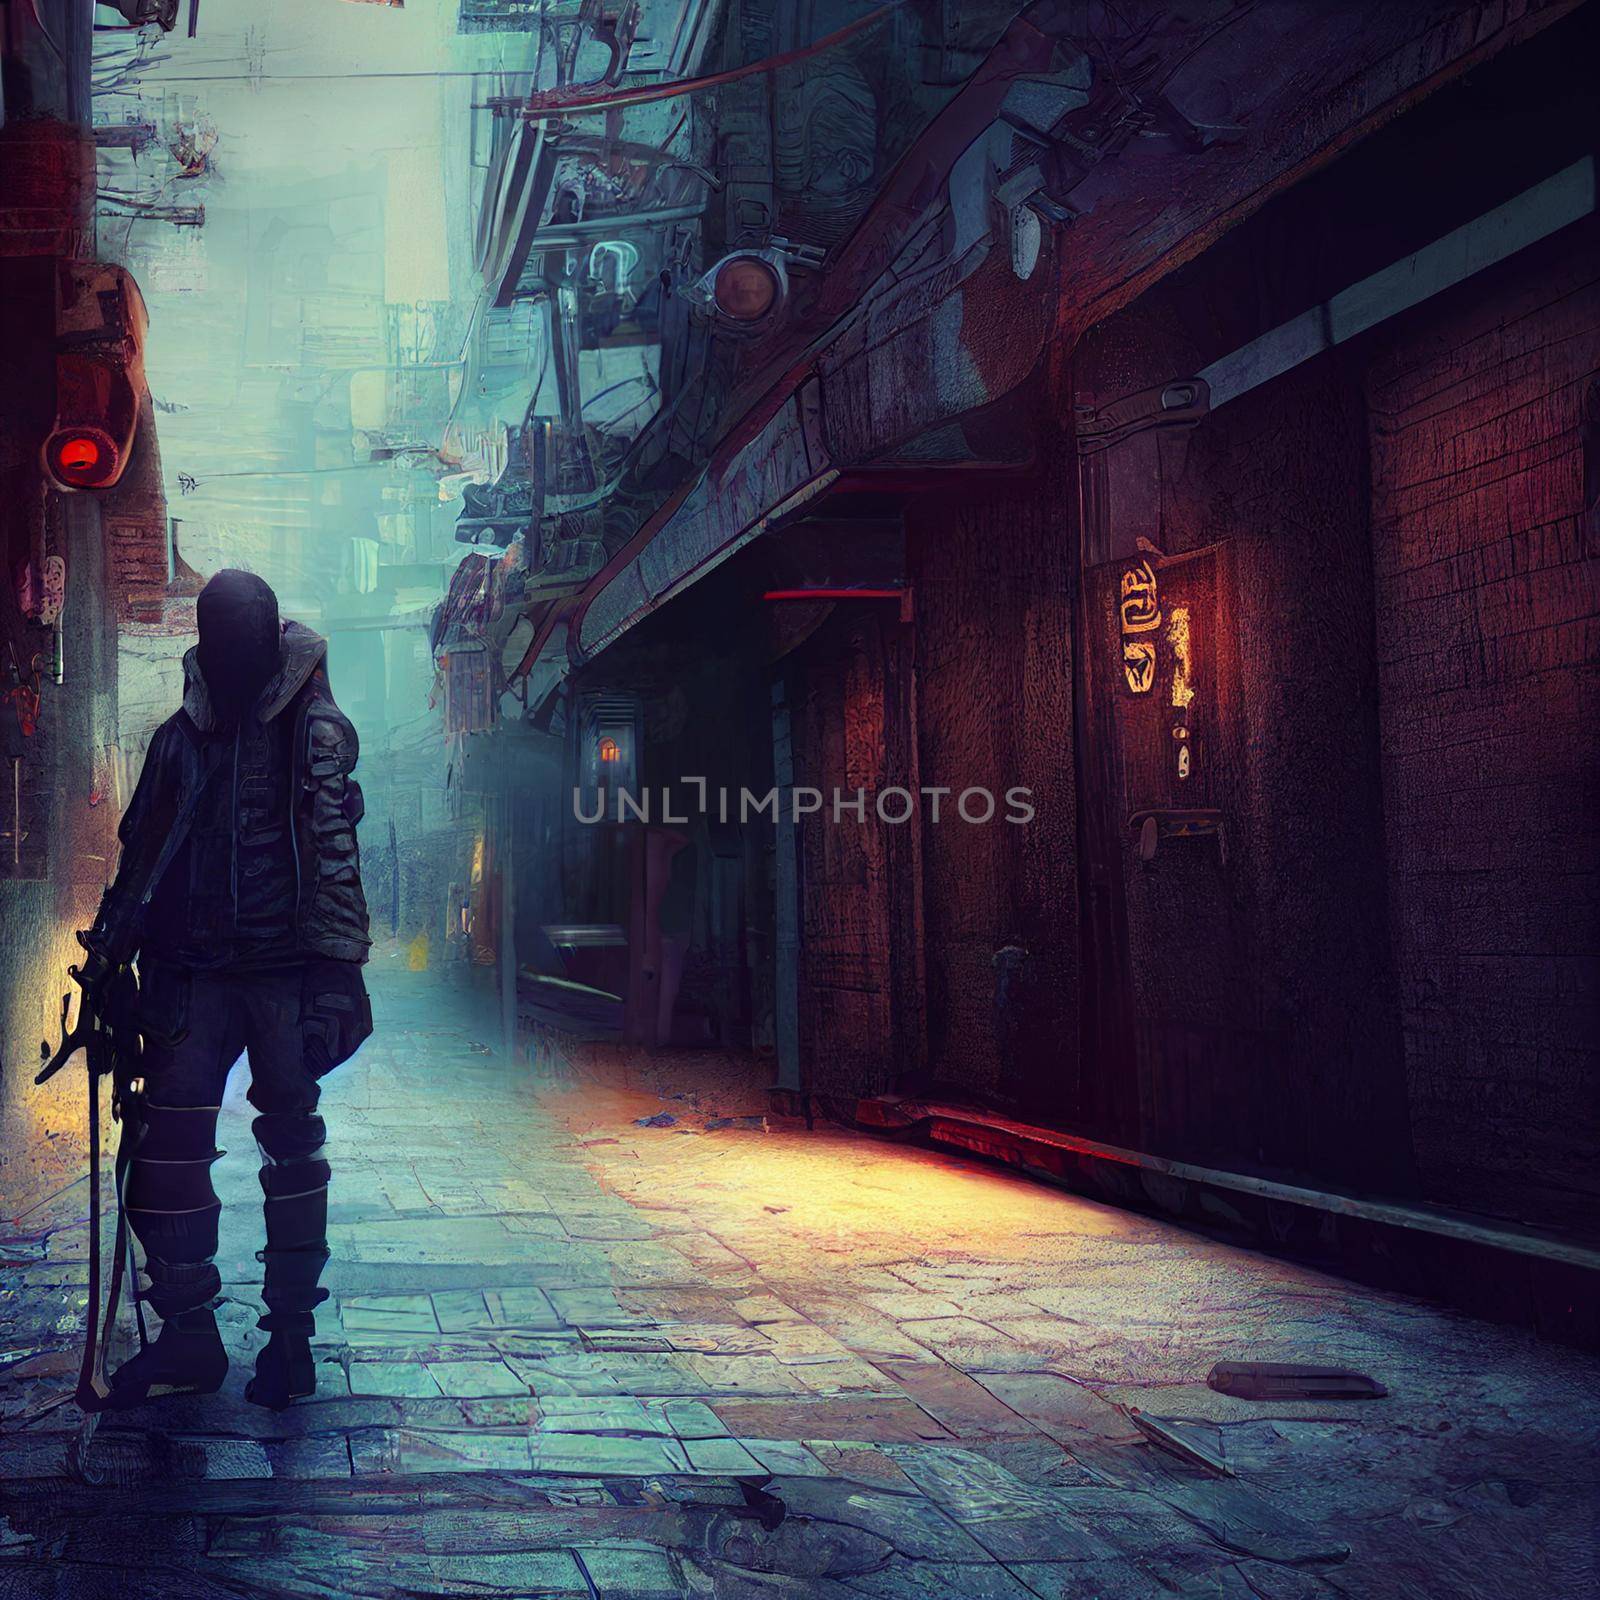 Gloomy image of a futuristic street by NeuroSky